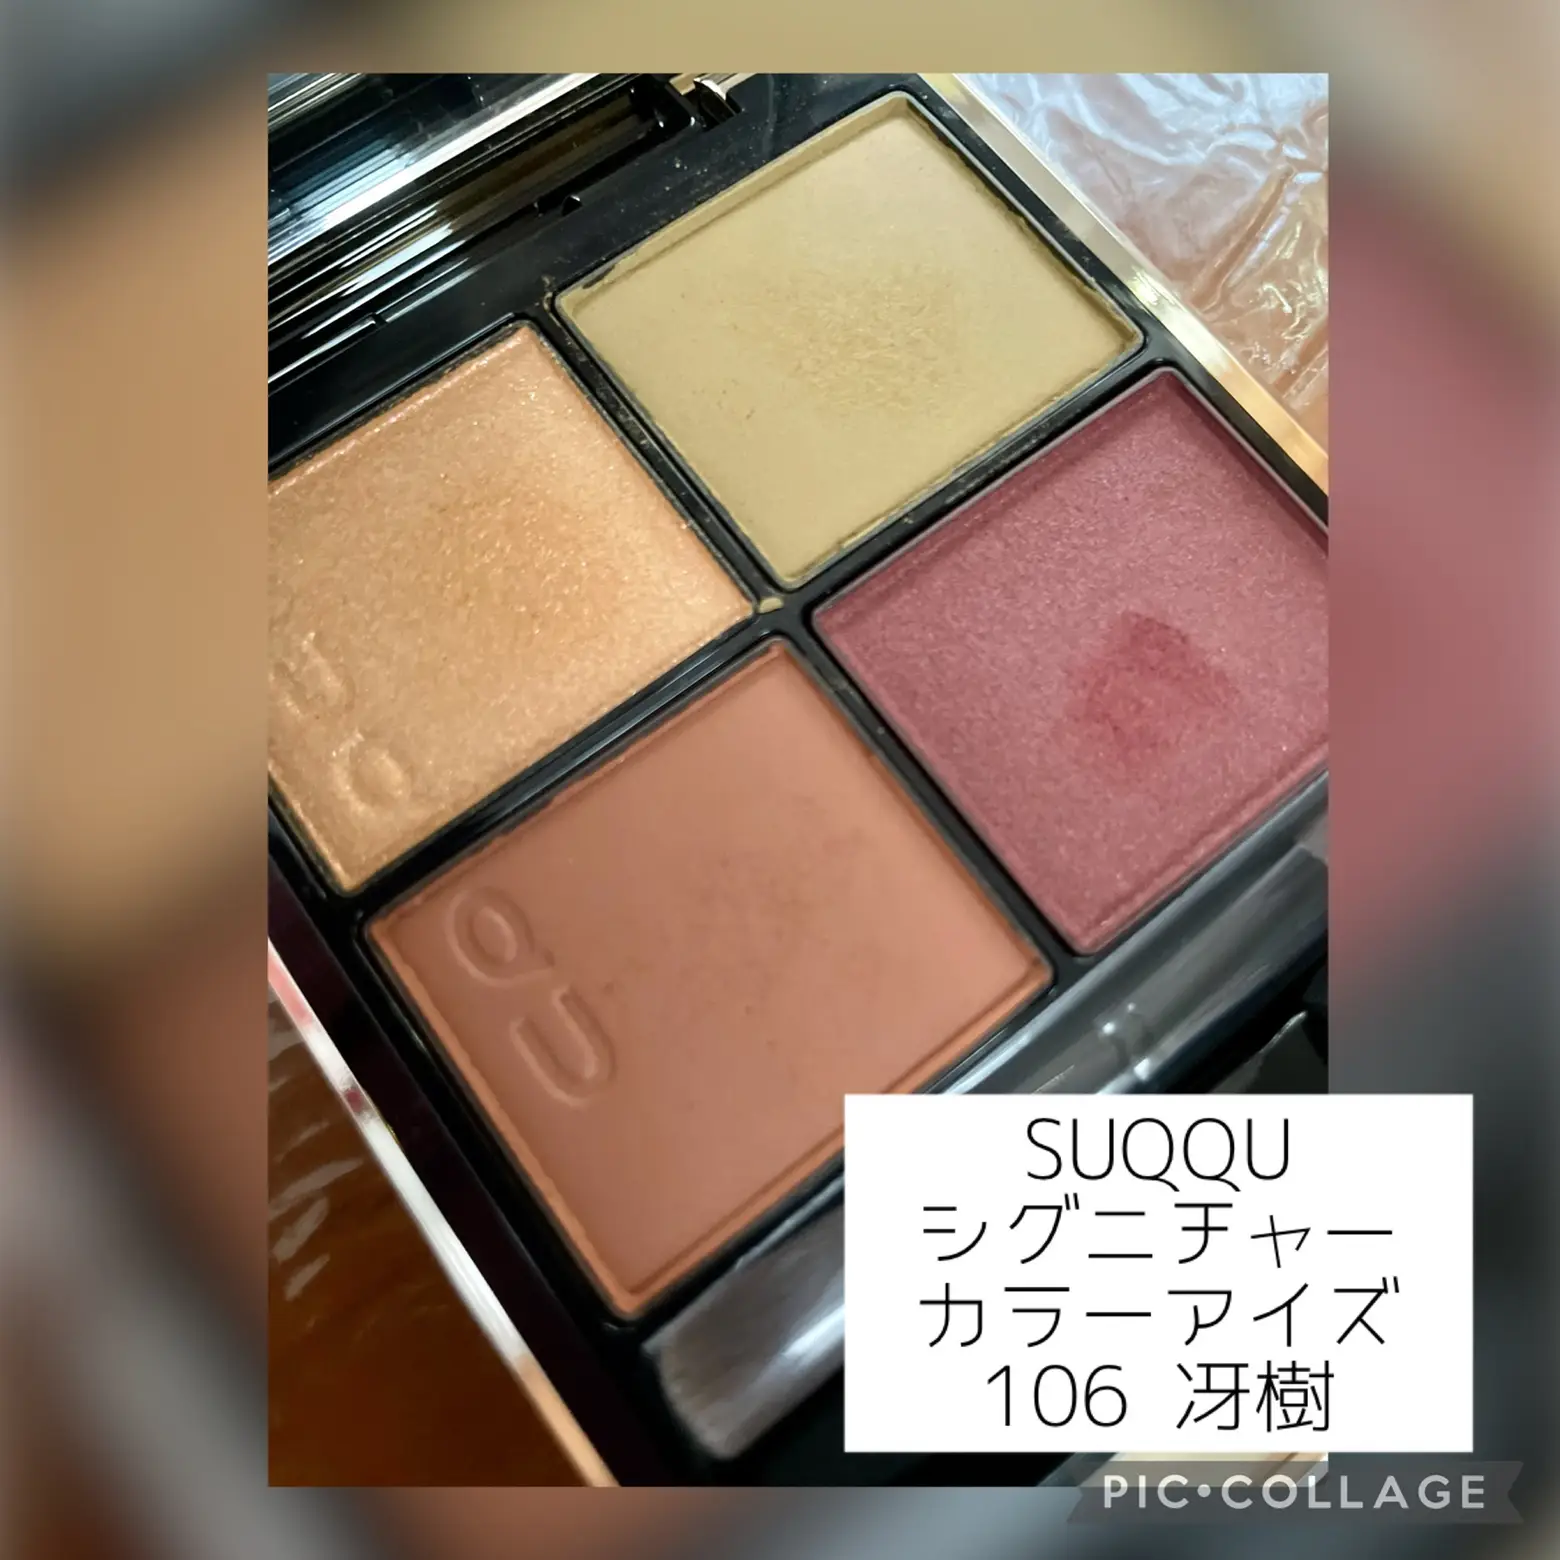 SUQQU シグニチャー カラー アイズ 106 冴樹 -SAEGI - メイクアップ